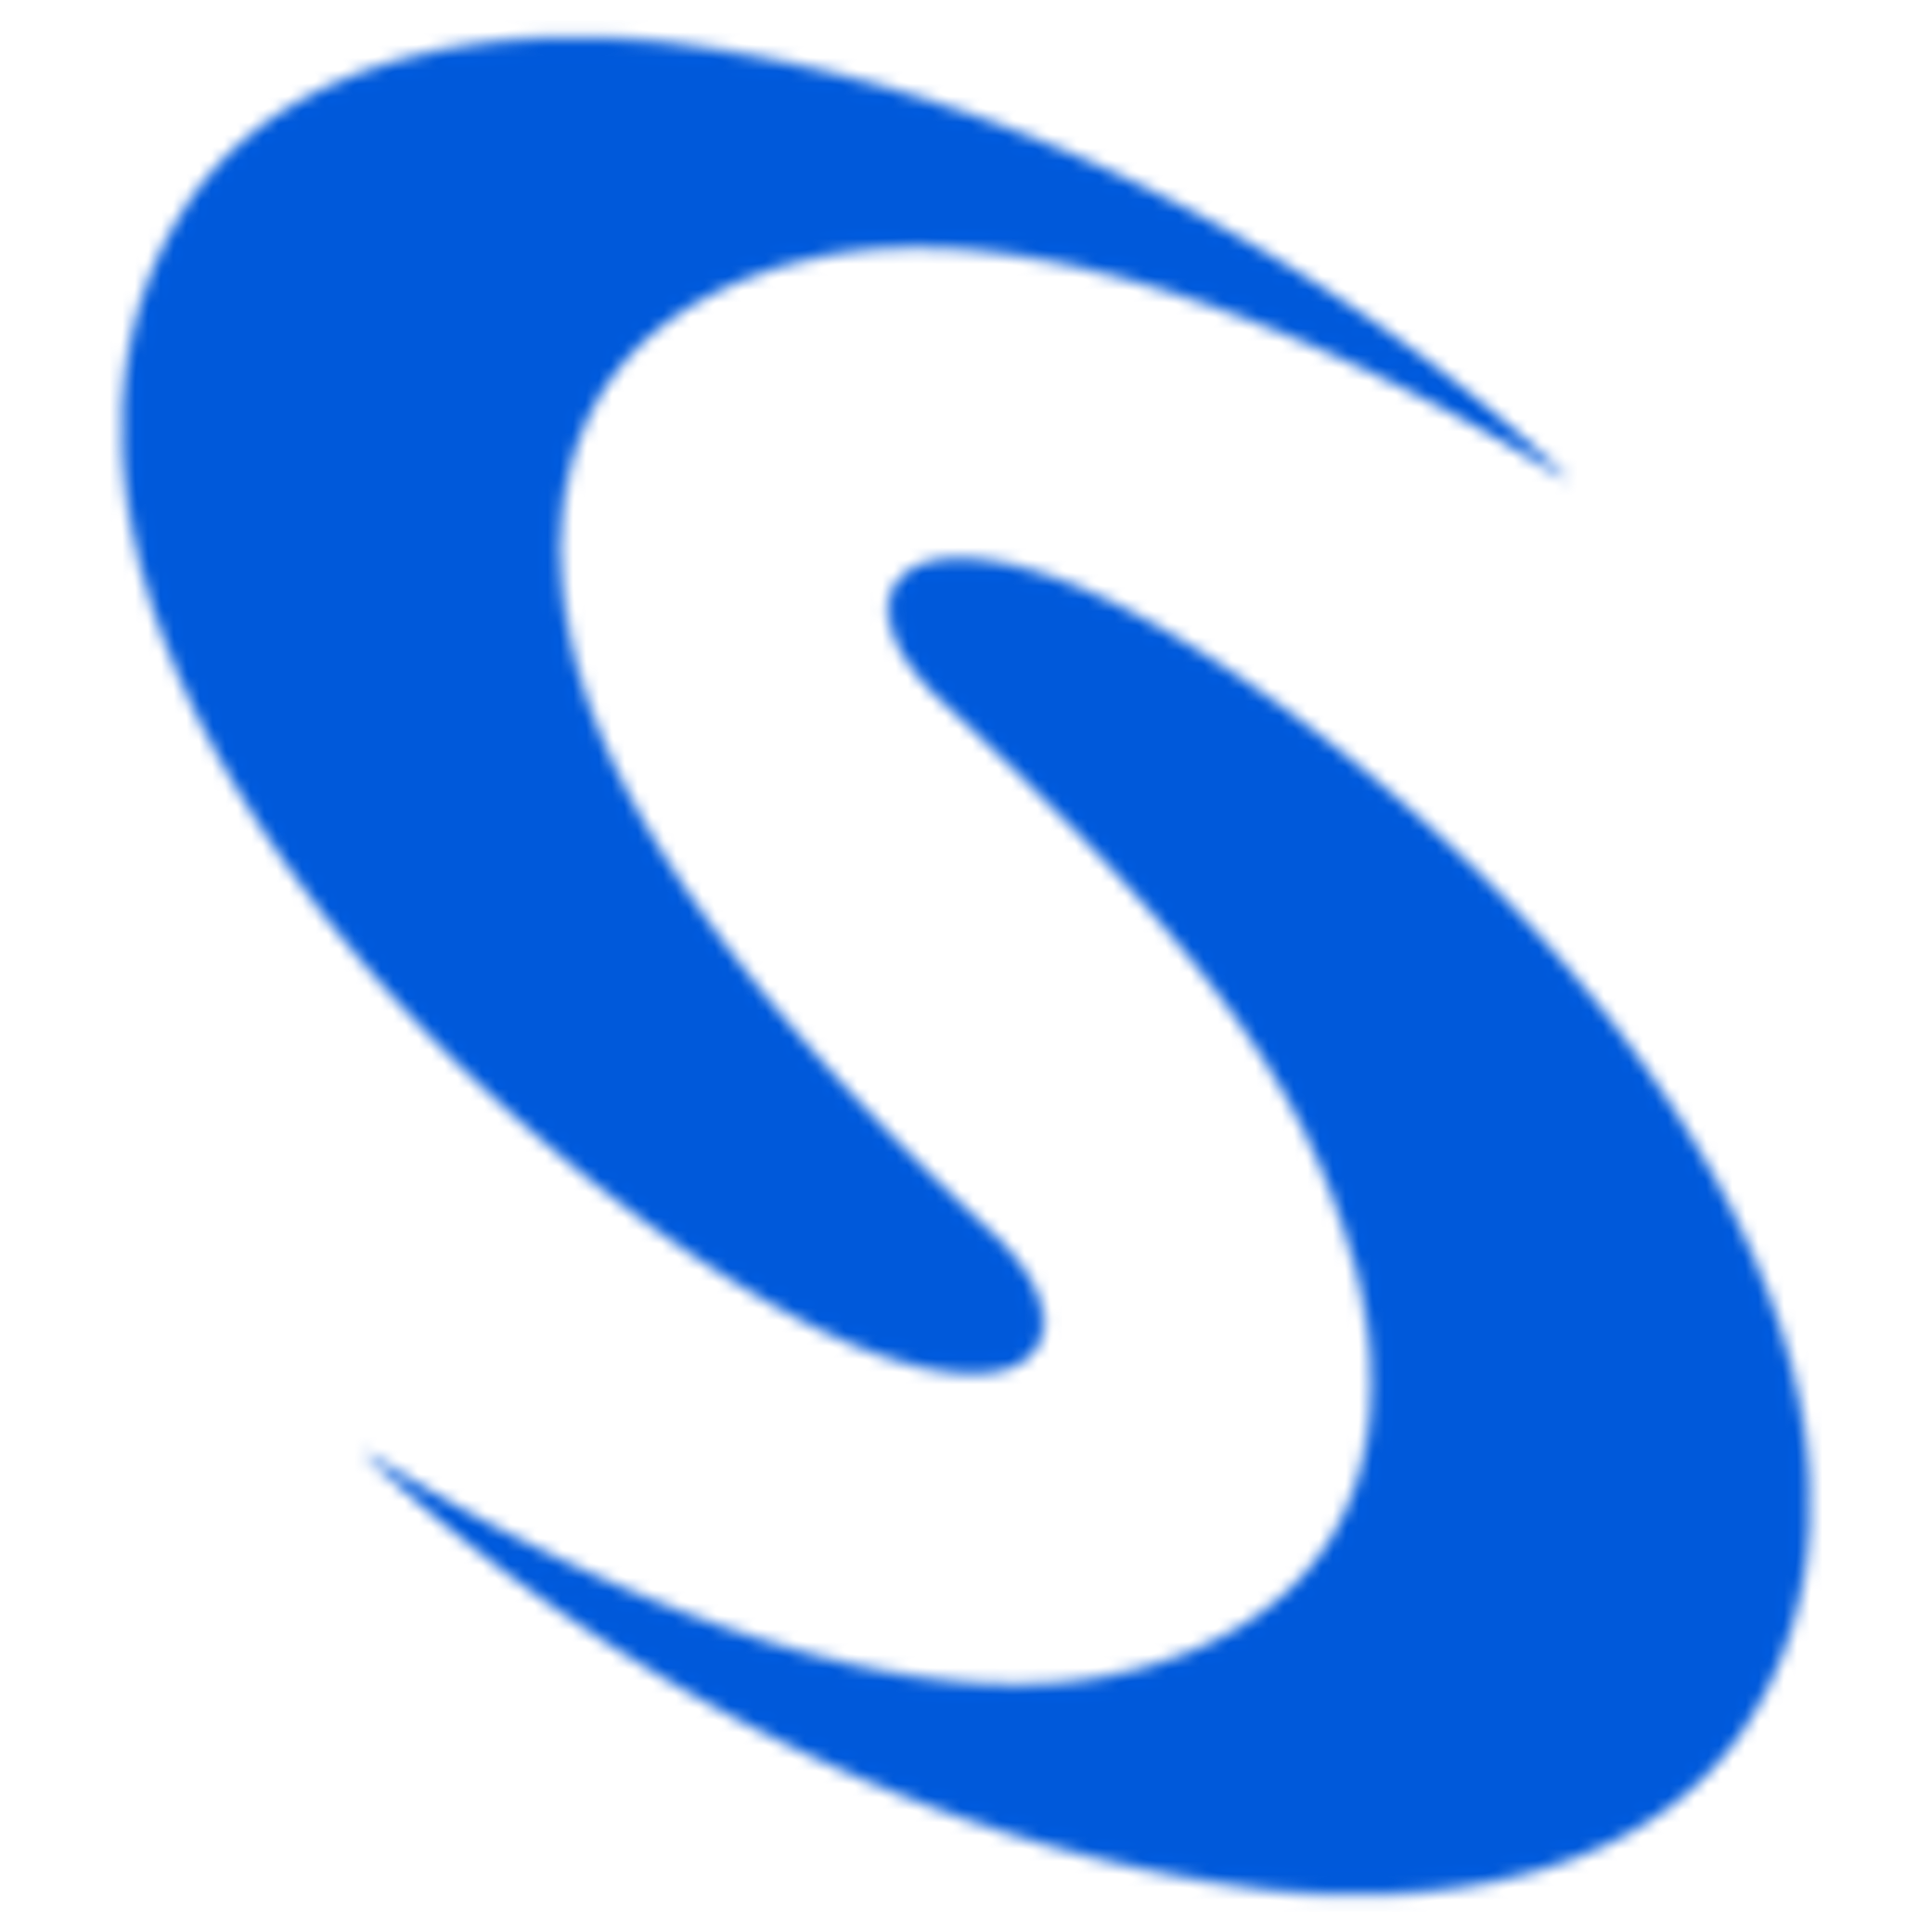 SkySlope Logo